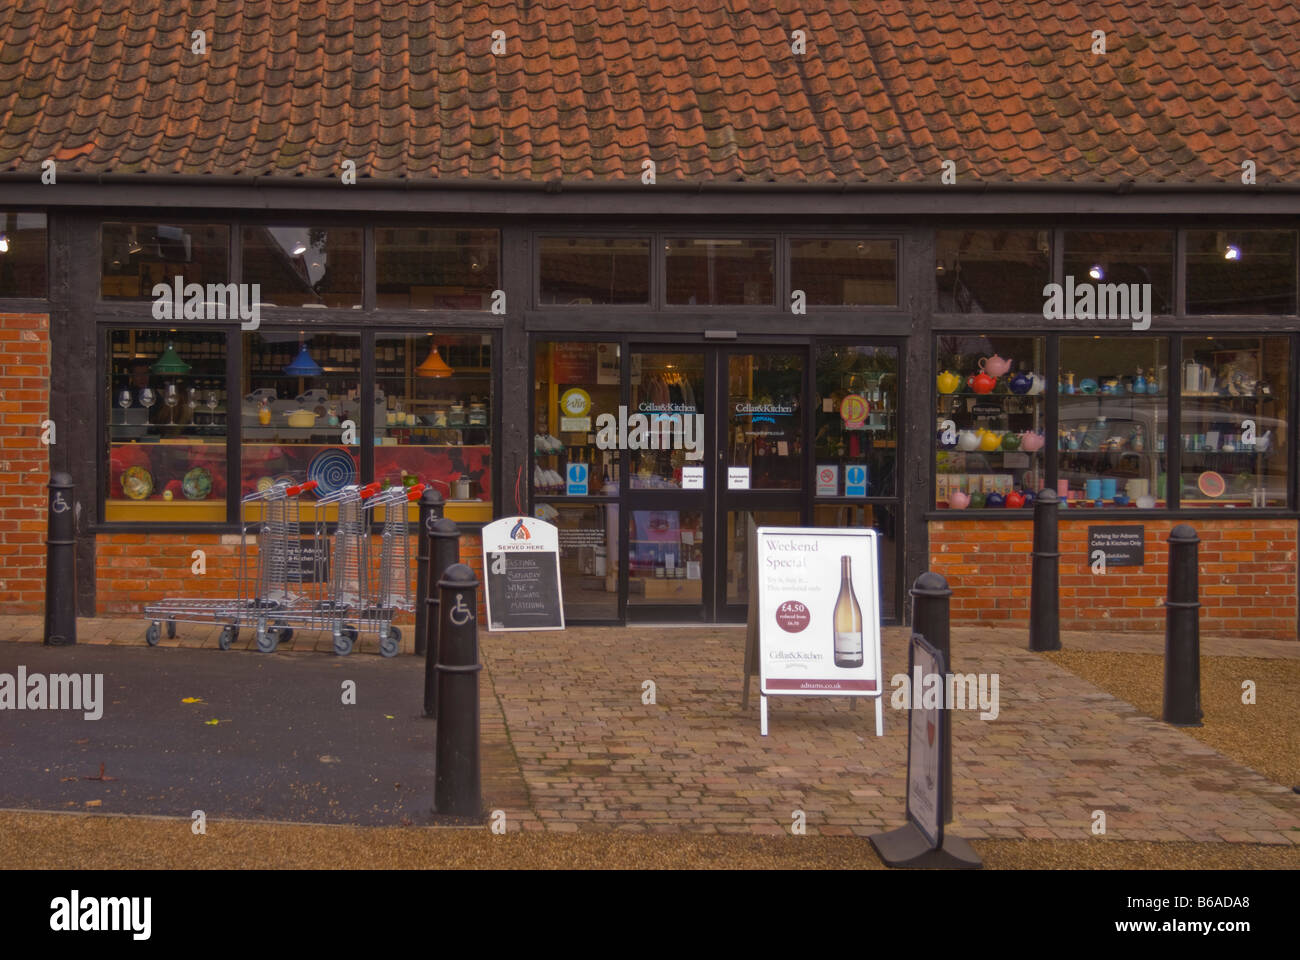 Adnams cellar & kitchen shop store in Harleston,Norfolk,Uk Stock Photo